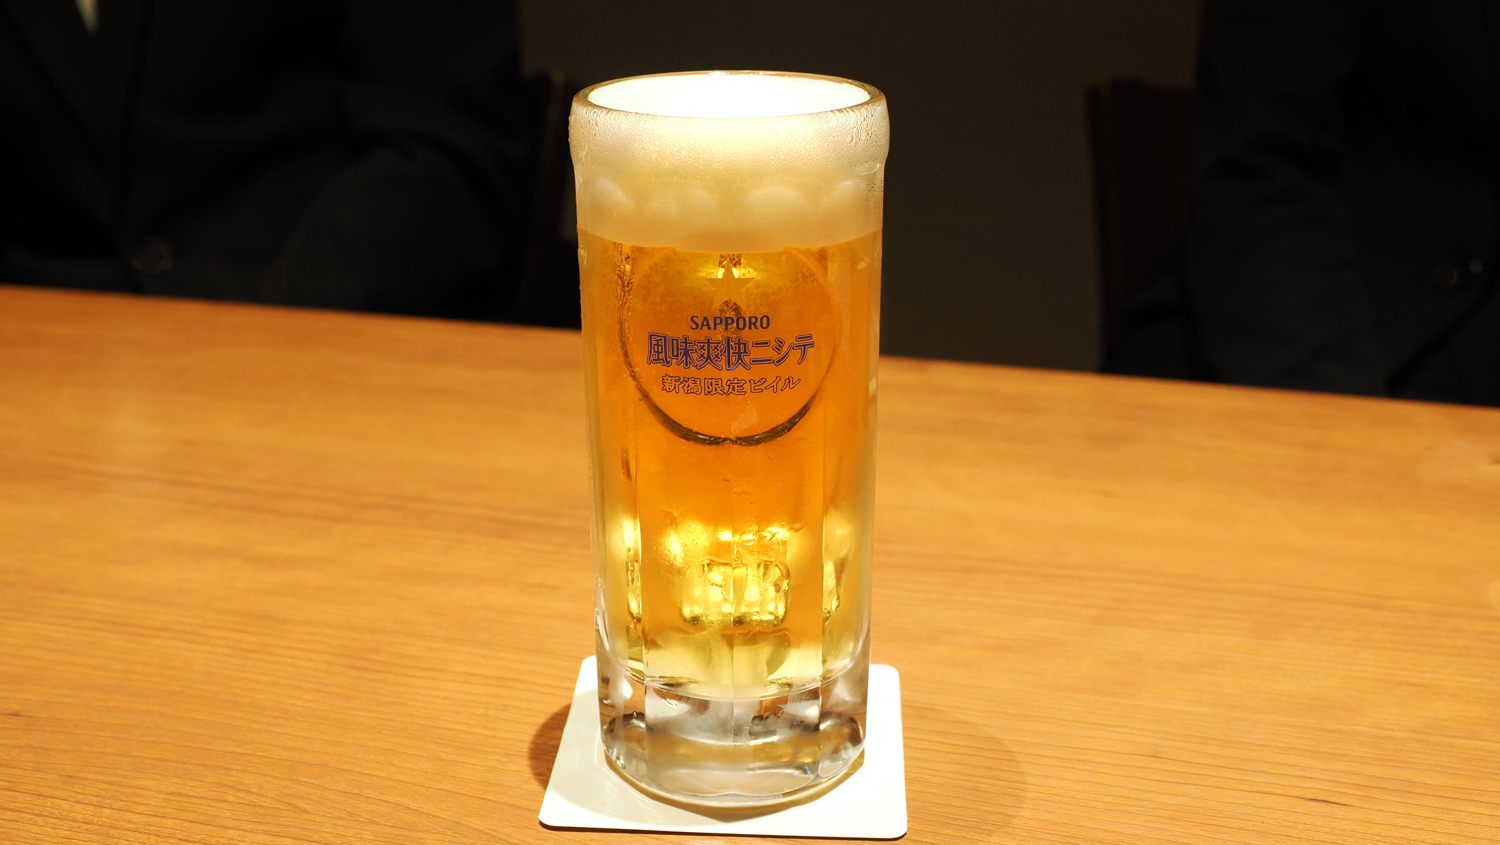 Niigata limited beer "Fuumi Sokainishite" from SAPPORO BEER